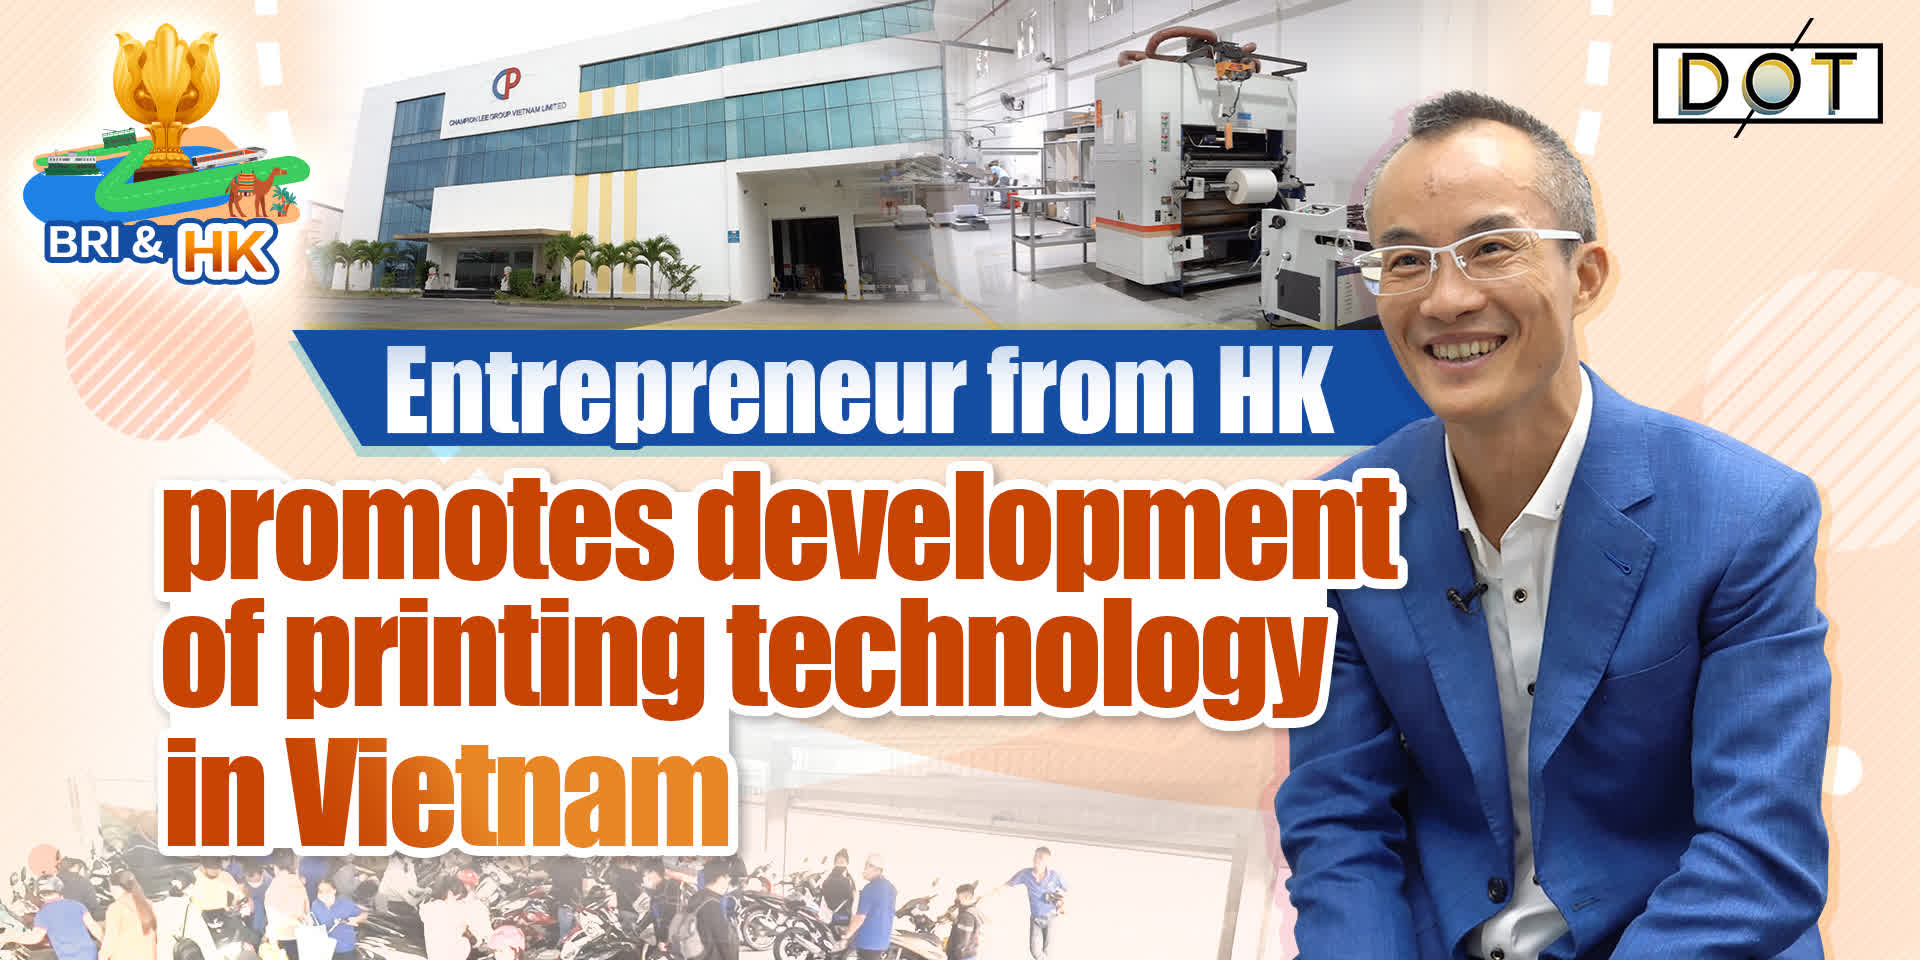 BRI & HK EP2 | Entrepreneur from HK promotes development of printing technology in Vietnam